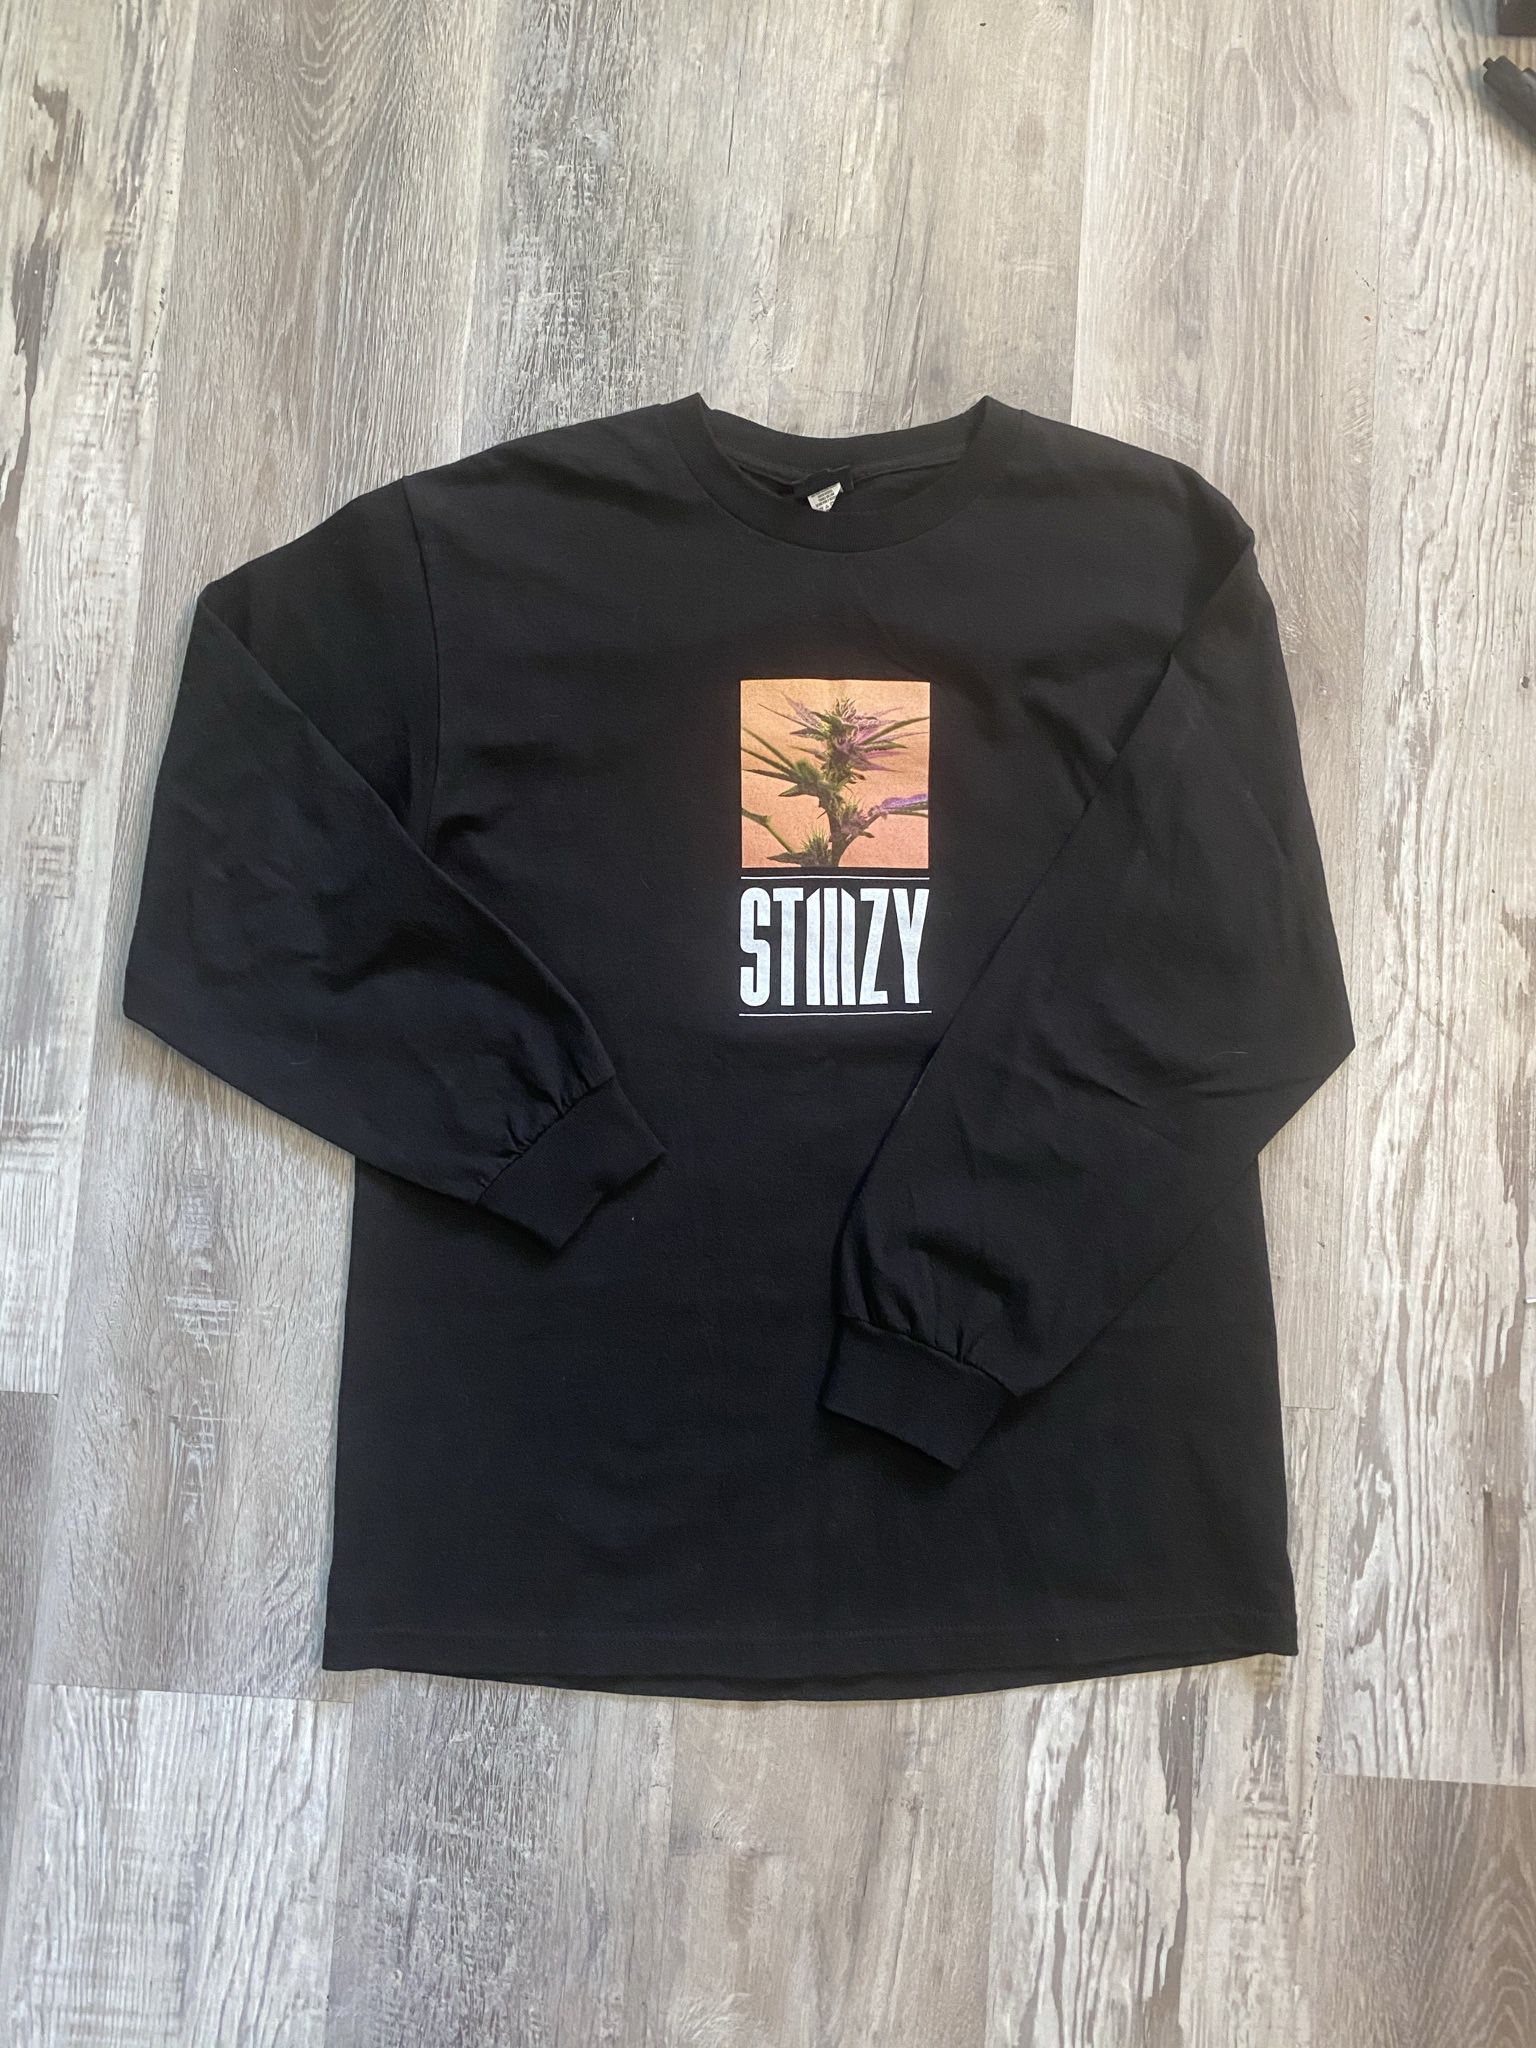 Stiiizy Long Sleeve T Shirt for Sale in Palmdale, CA - OfferUp